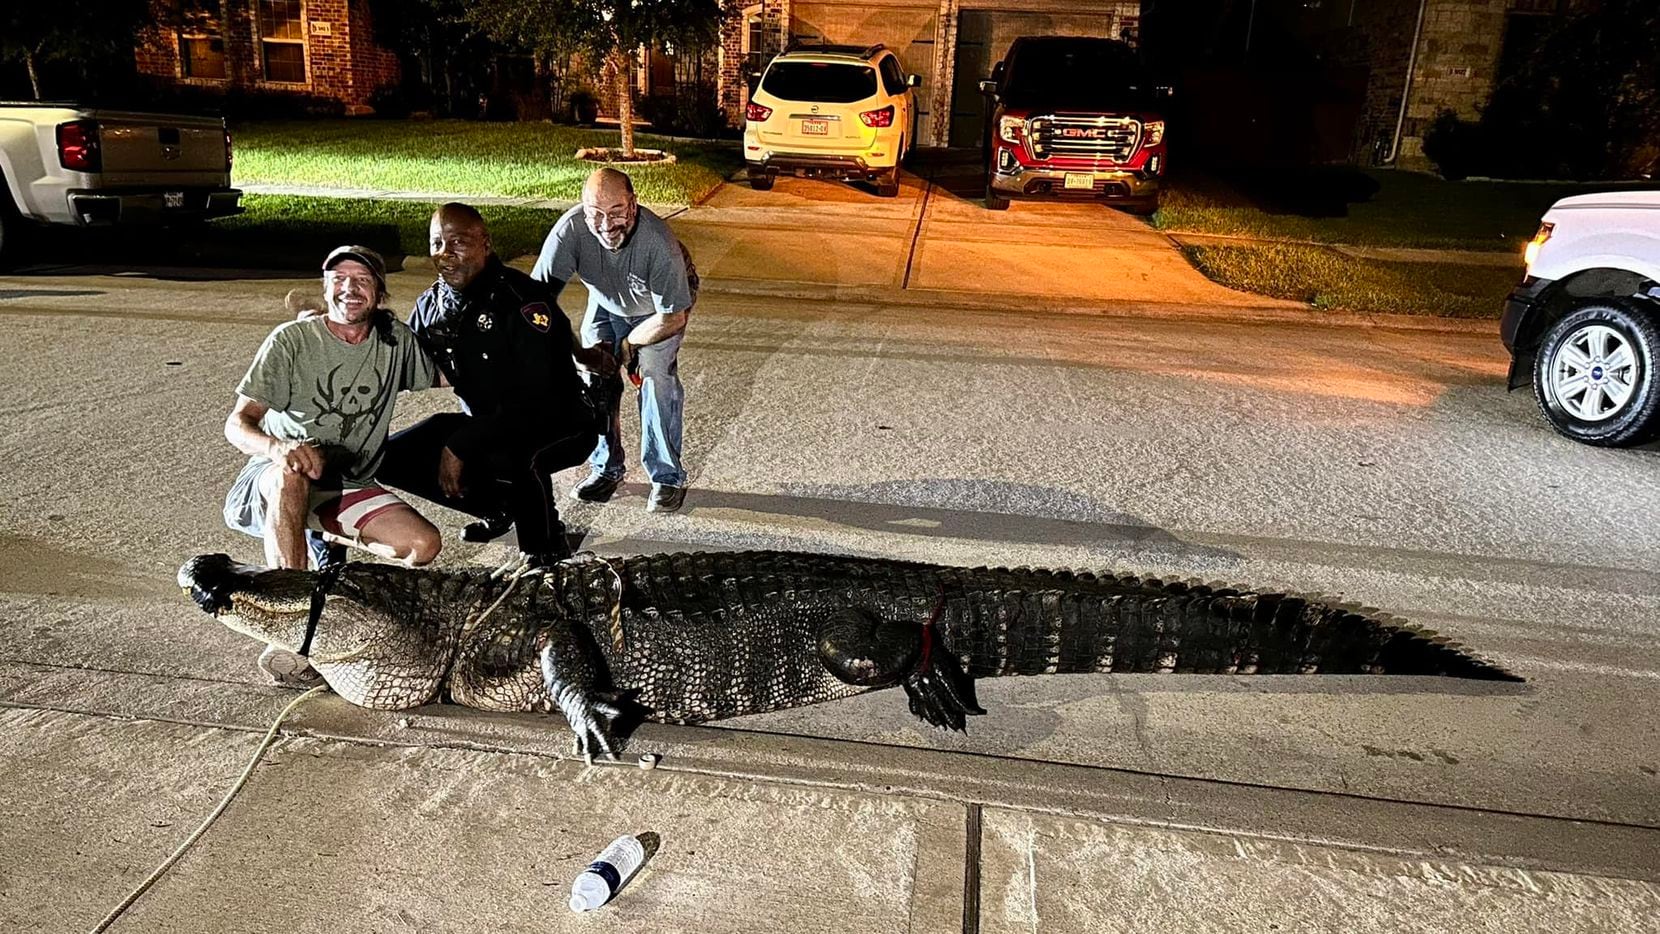 Authorities ranged a 12-foot alligator found in a Houston area neighborhood.